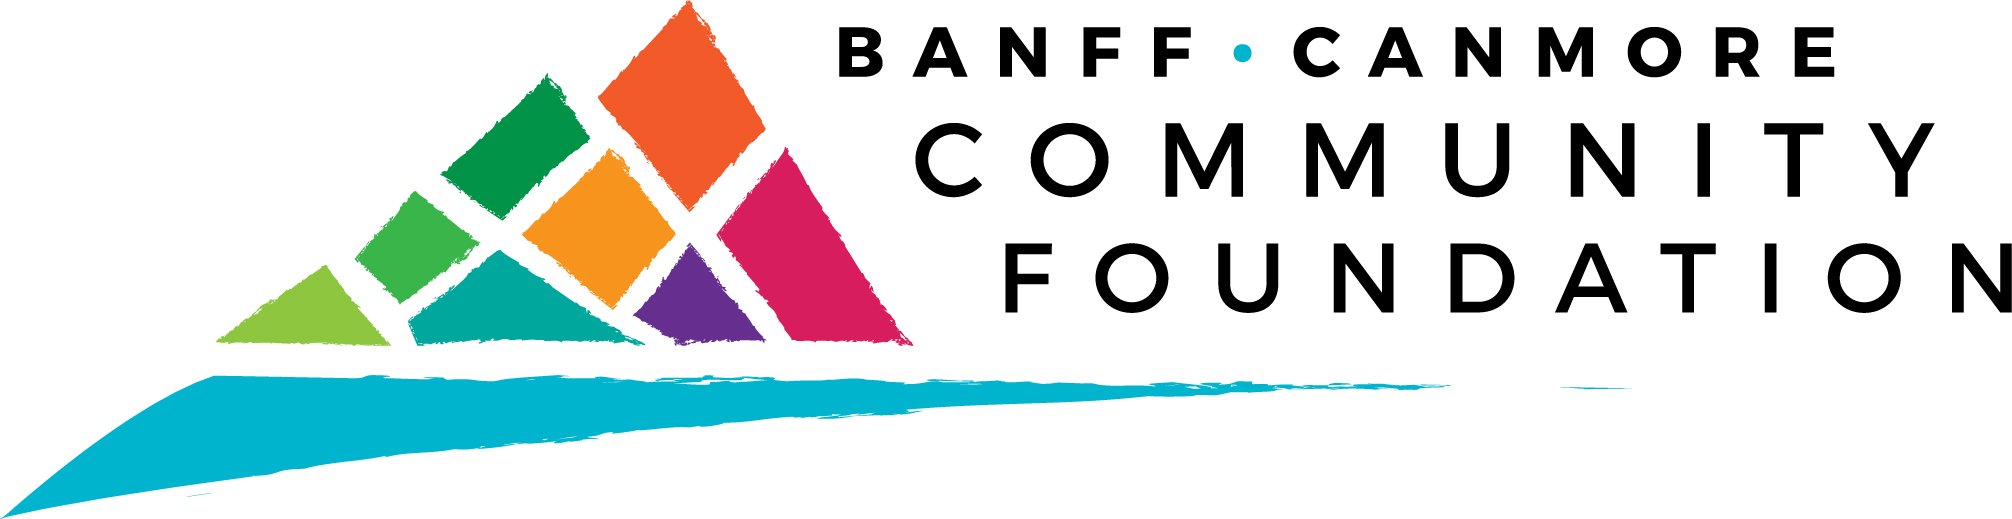 BCCF logo final.jpg